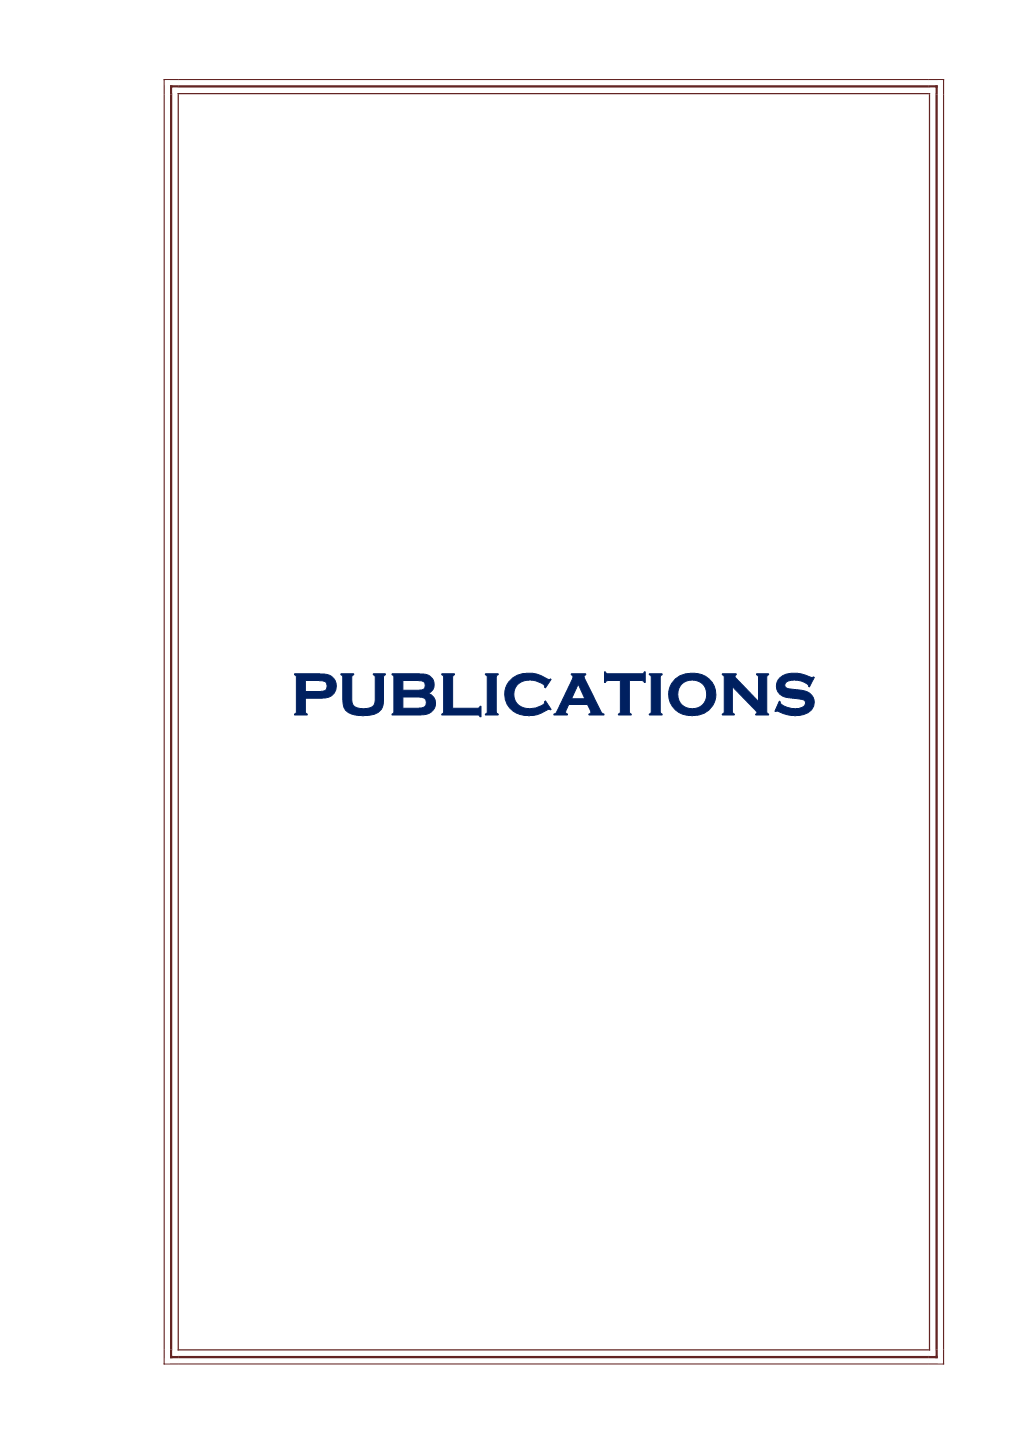 PUBLICATIONS Publications